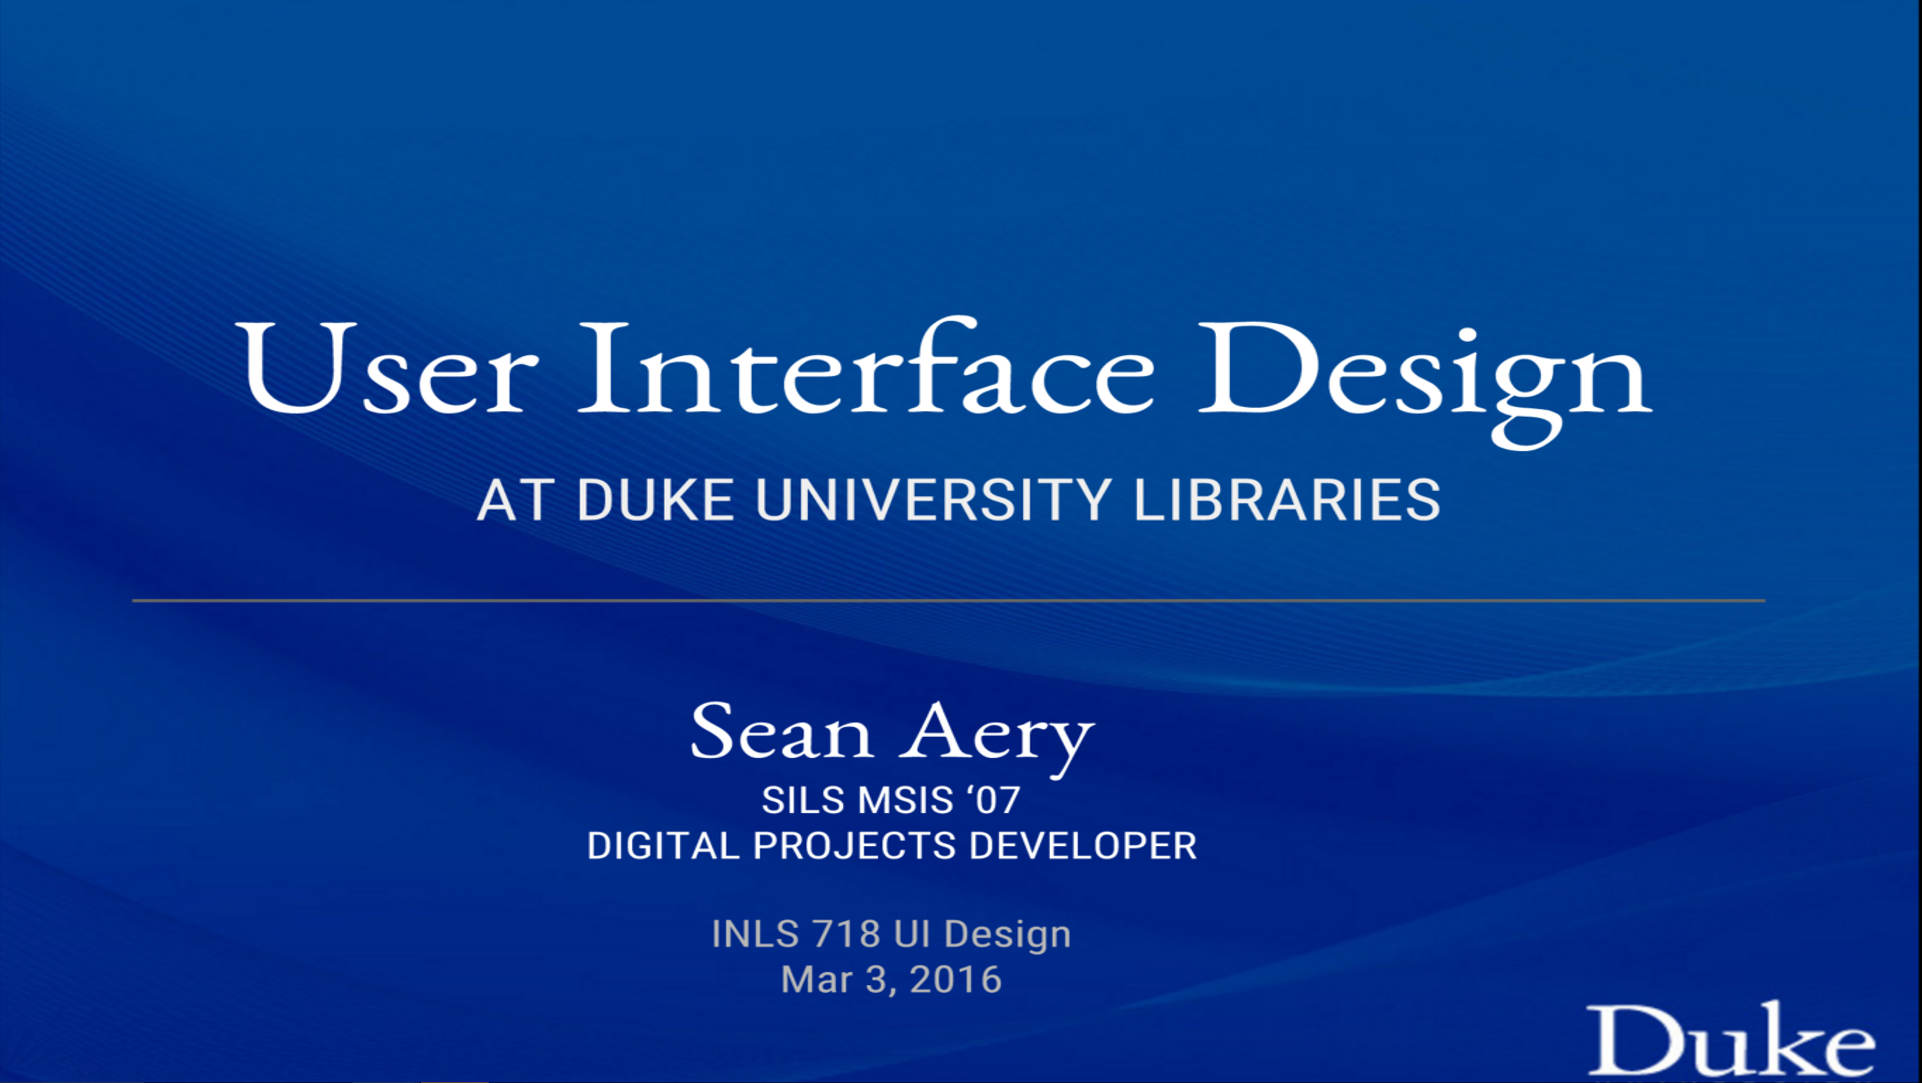 slides for Sean Aery's talk